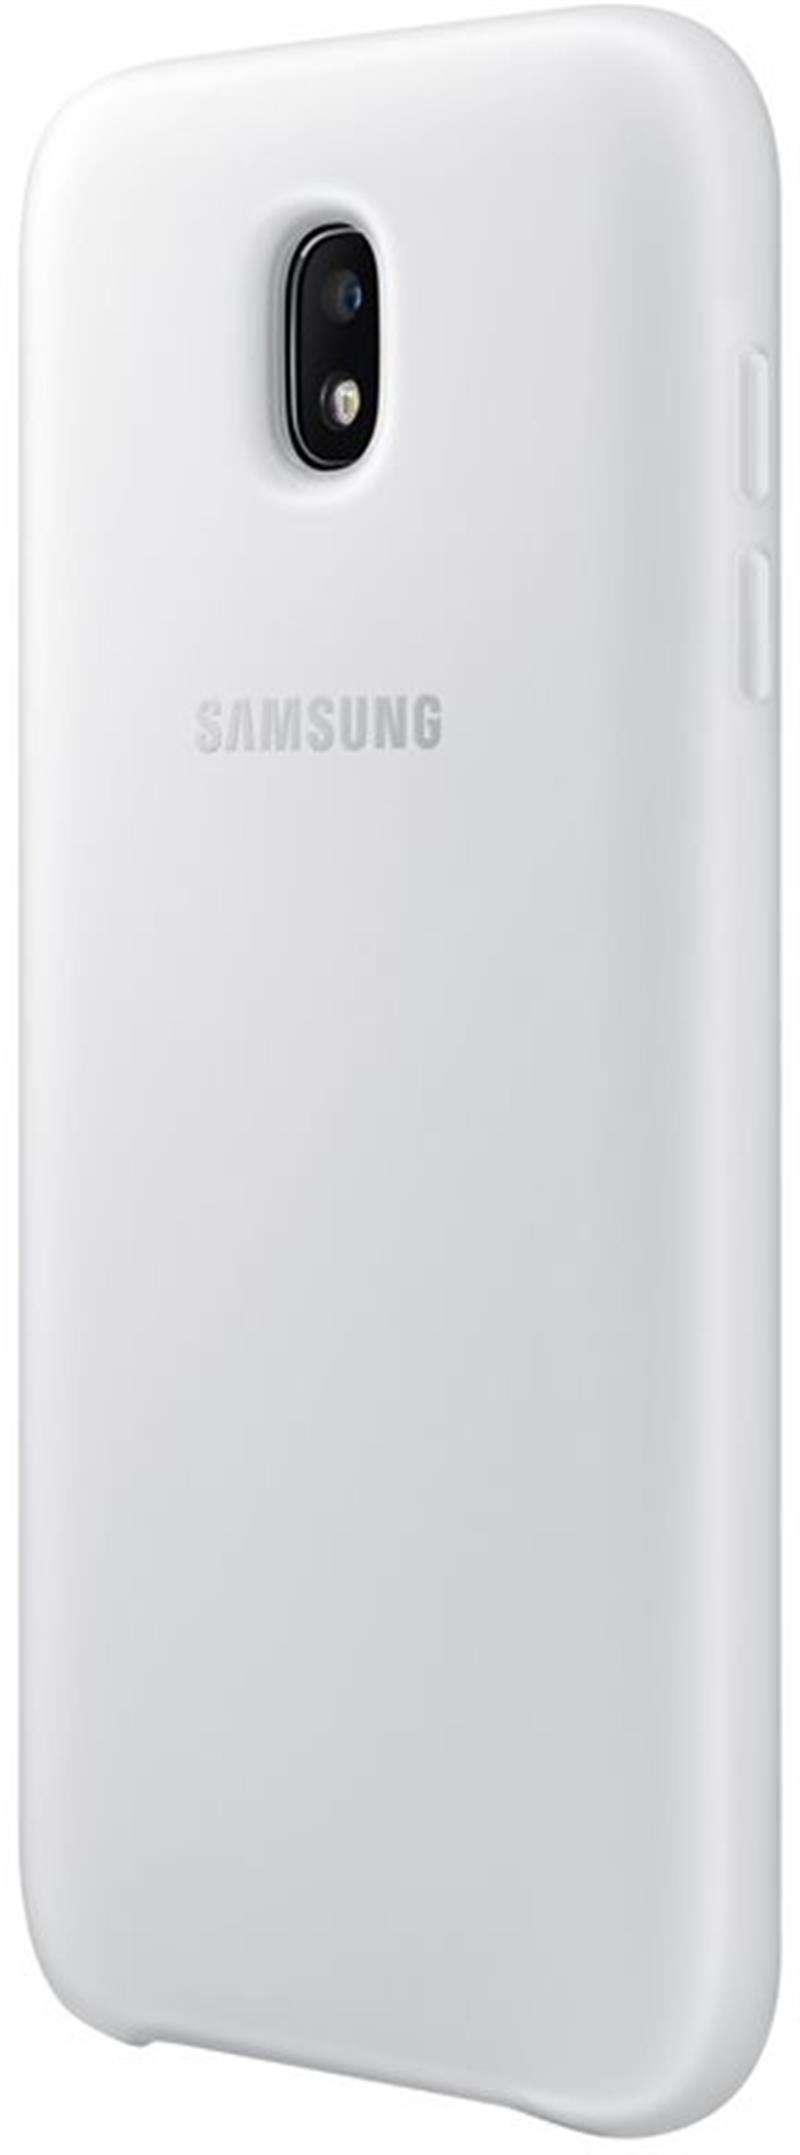  Samsung Dual Layer Cover Galaxy J5 2017 White